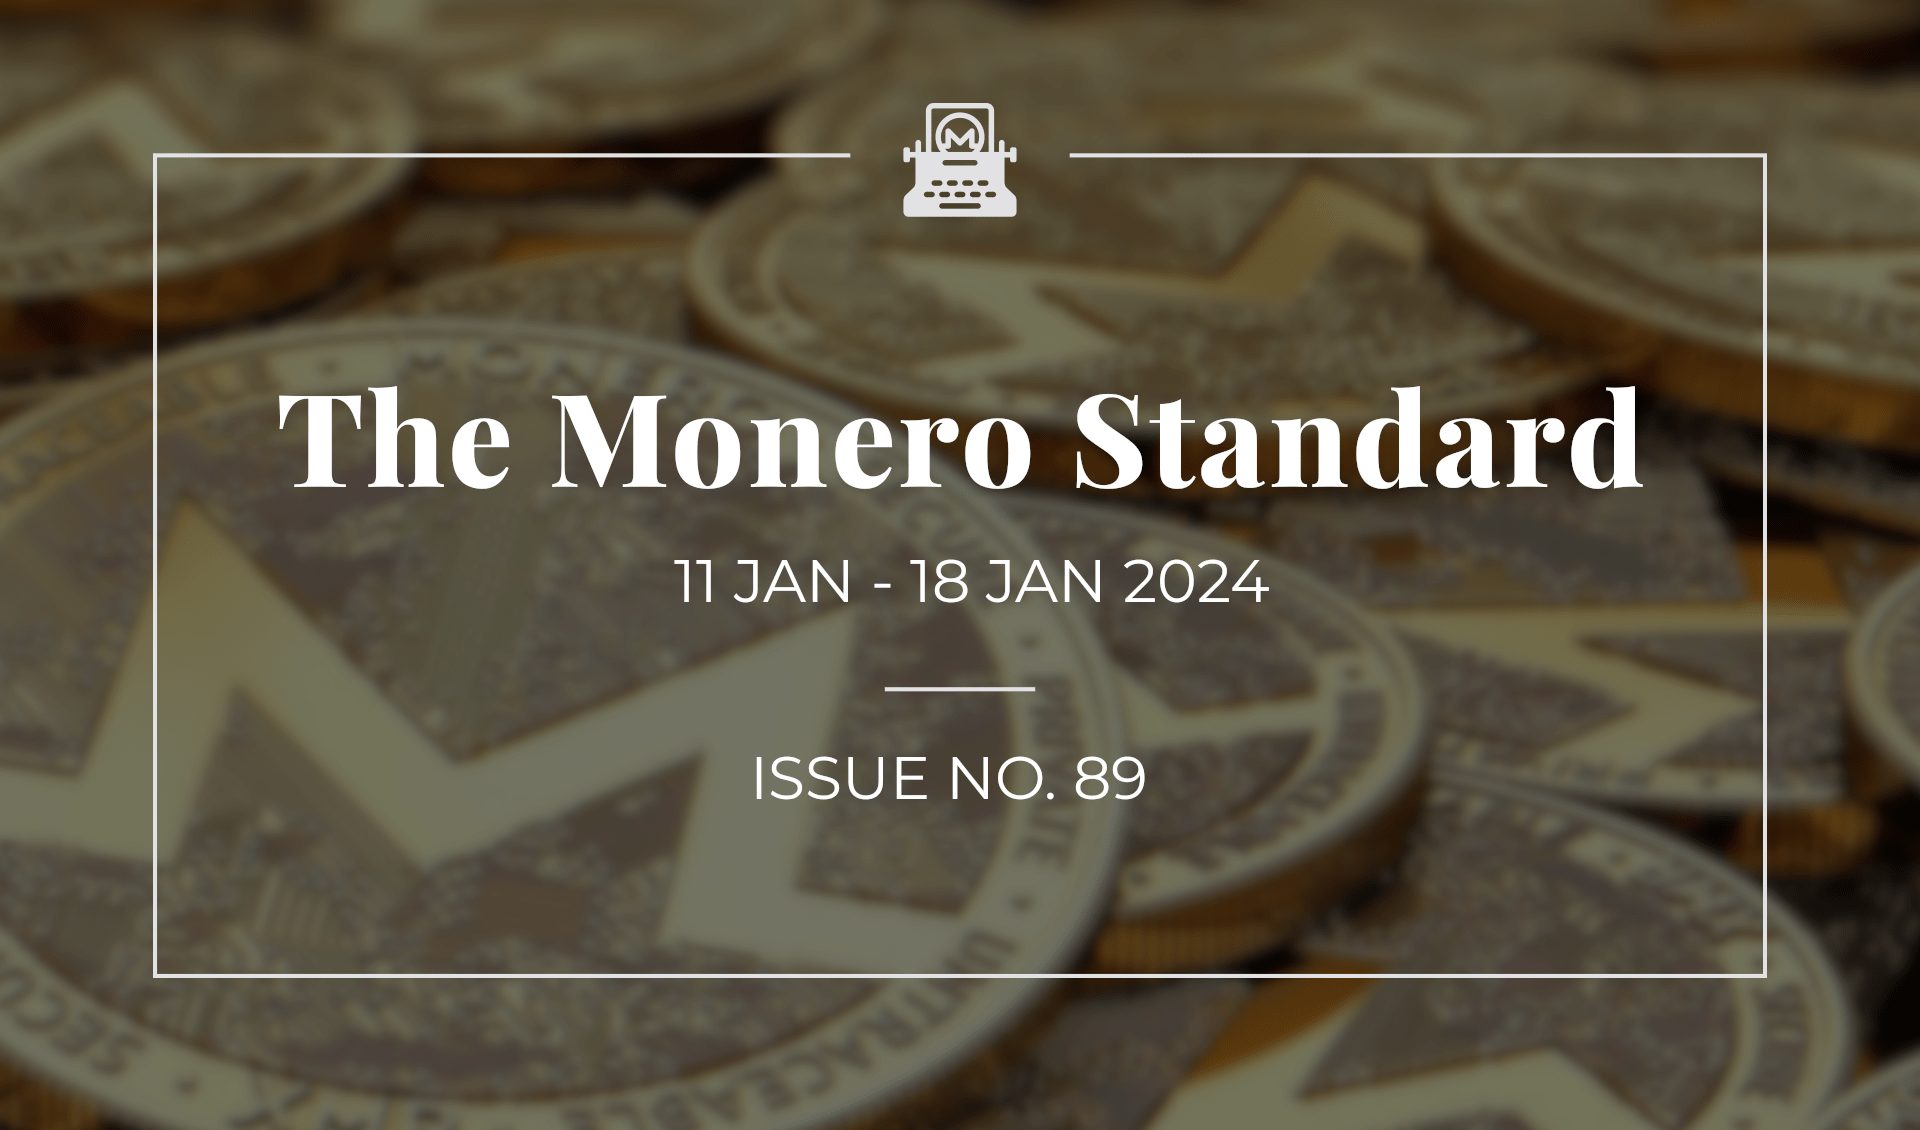 The Monero Standard #89: 11 Jan 2023 - 18 Jan 2024